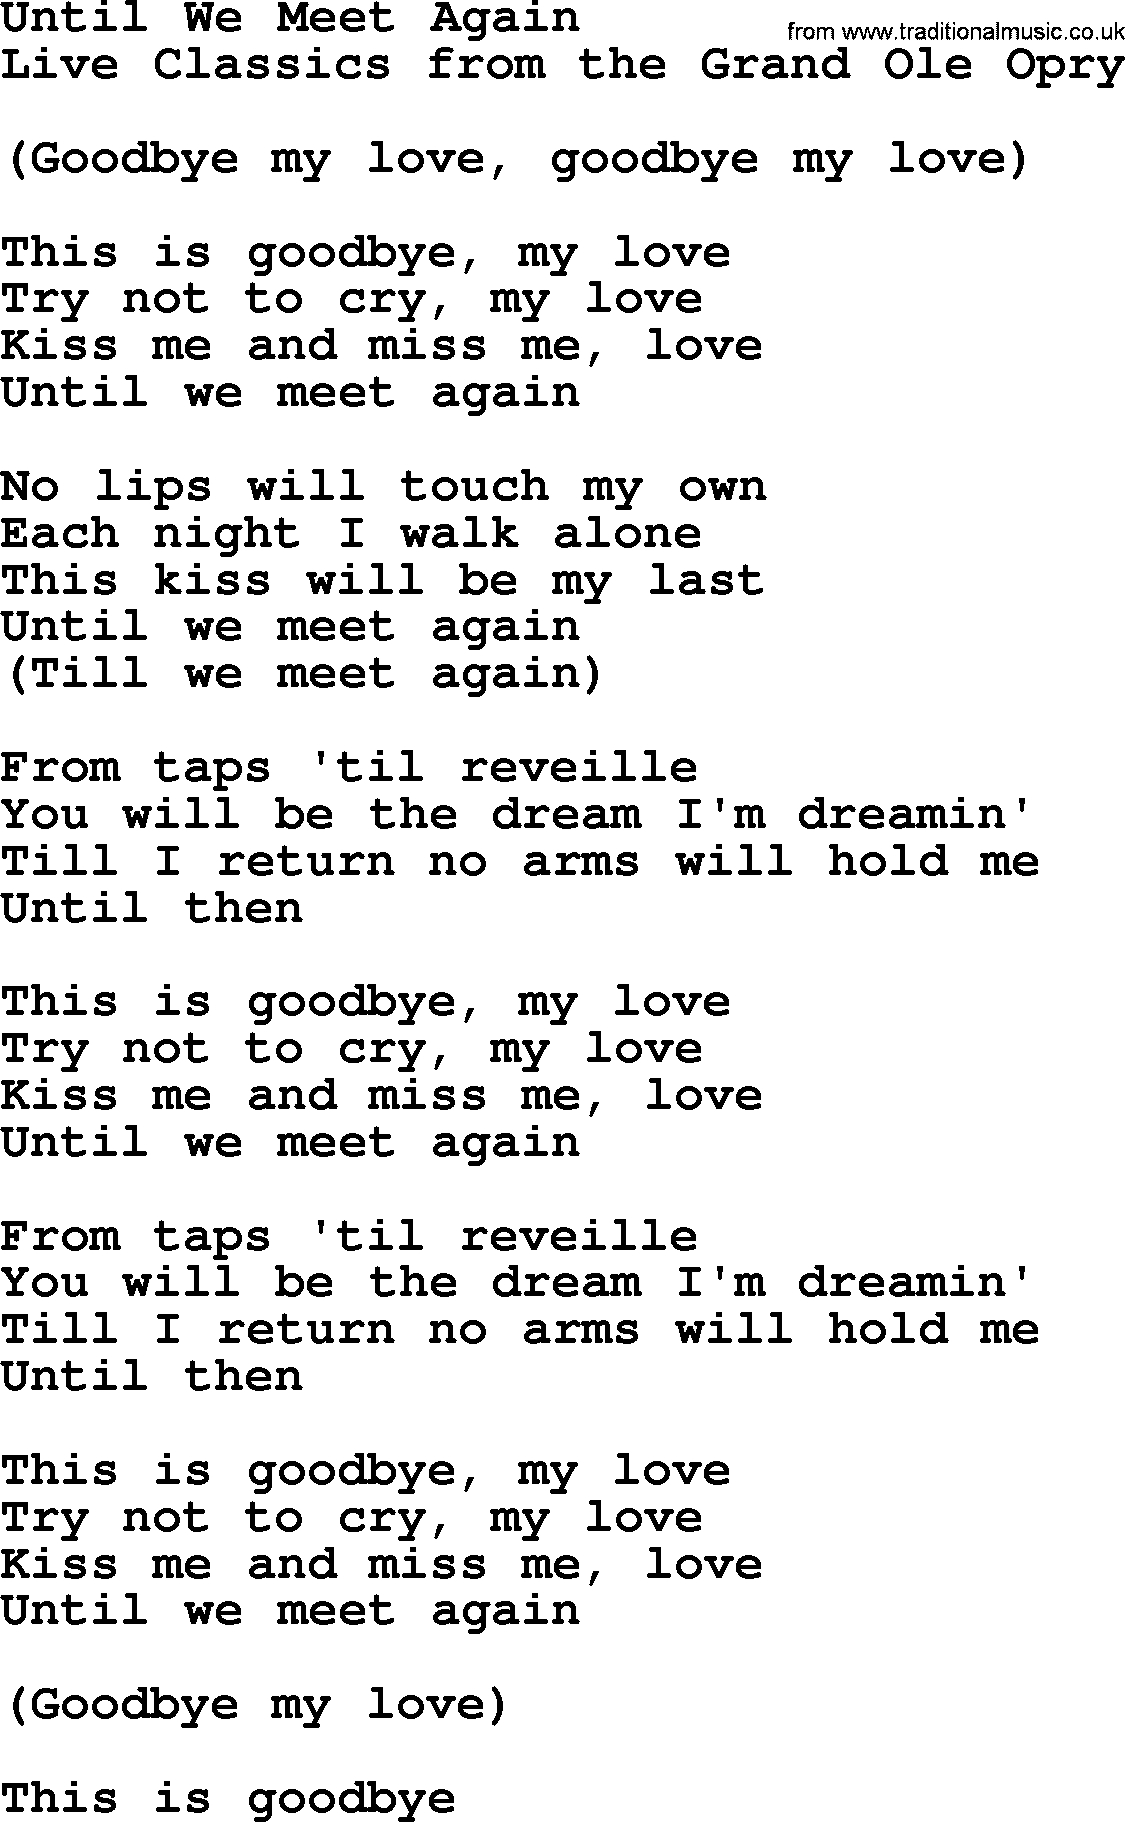 Marty Robbins song: Until We Meet Again, lyrics